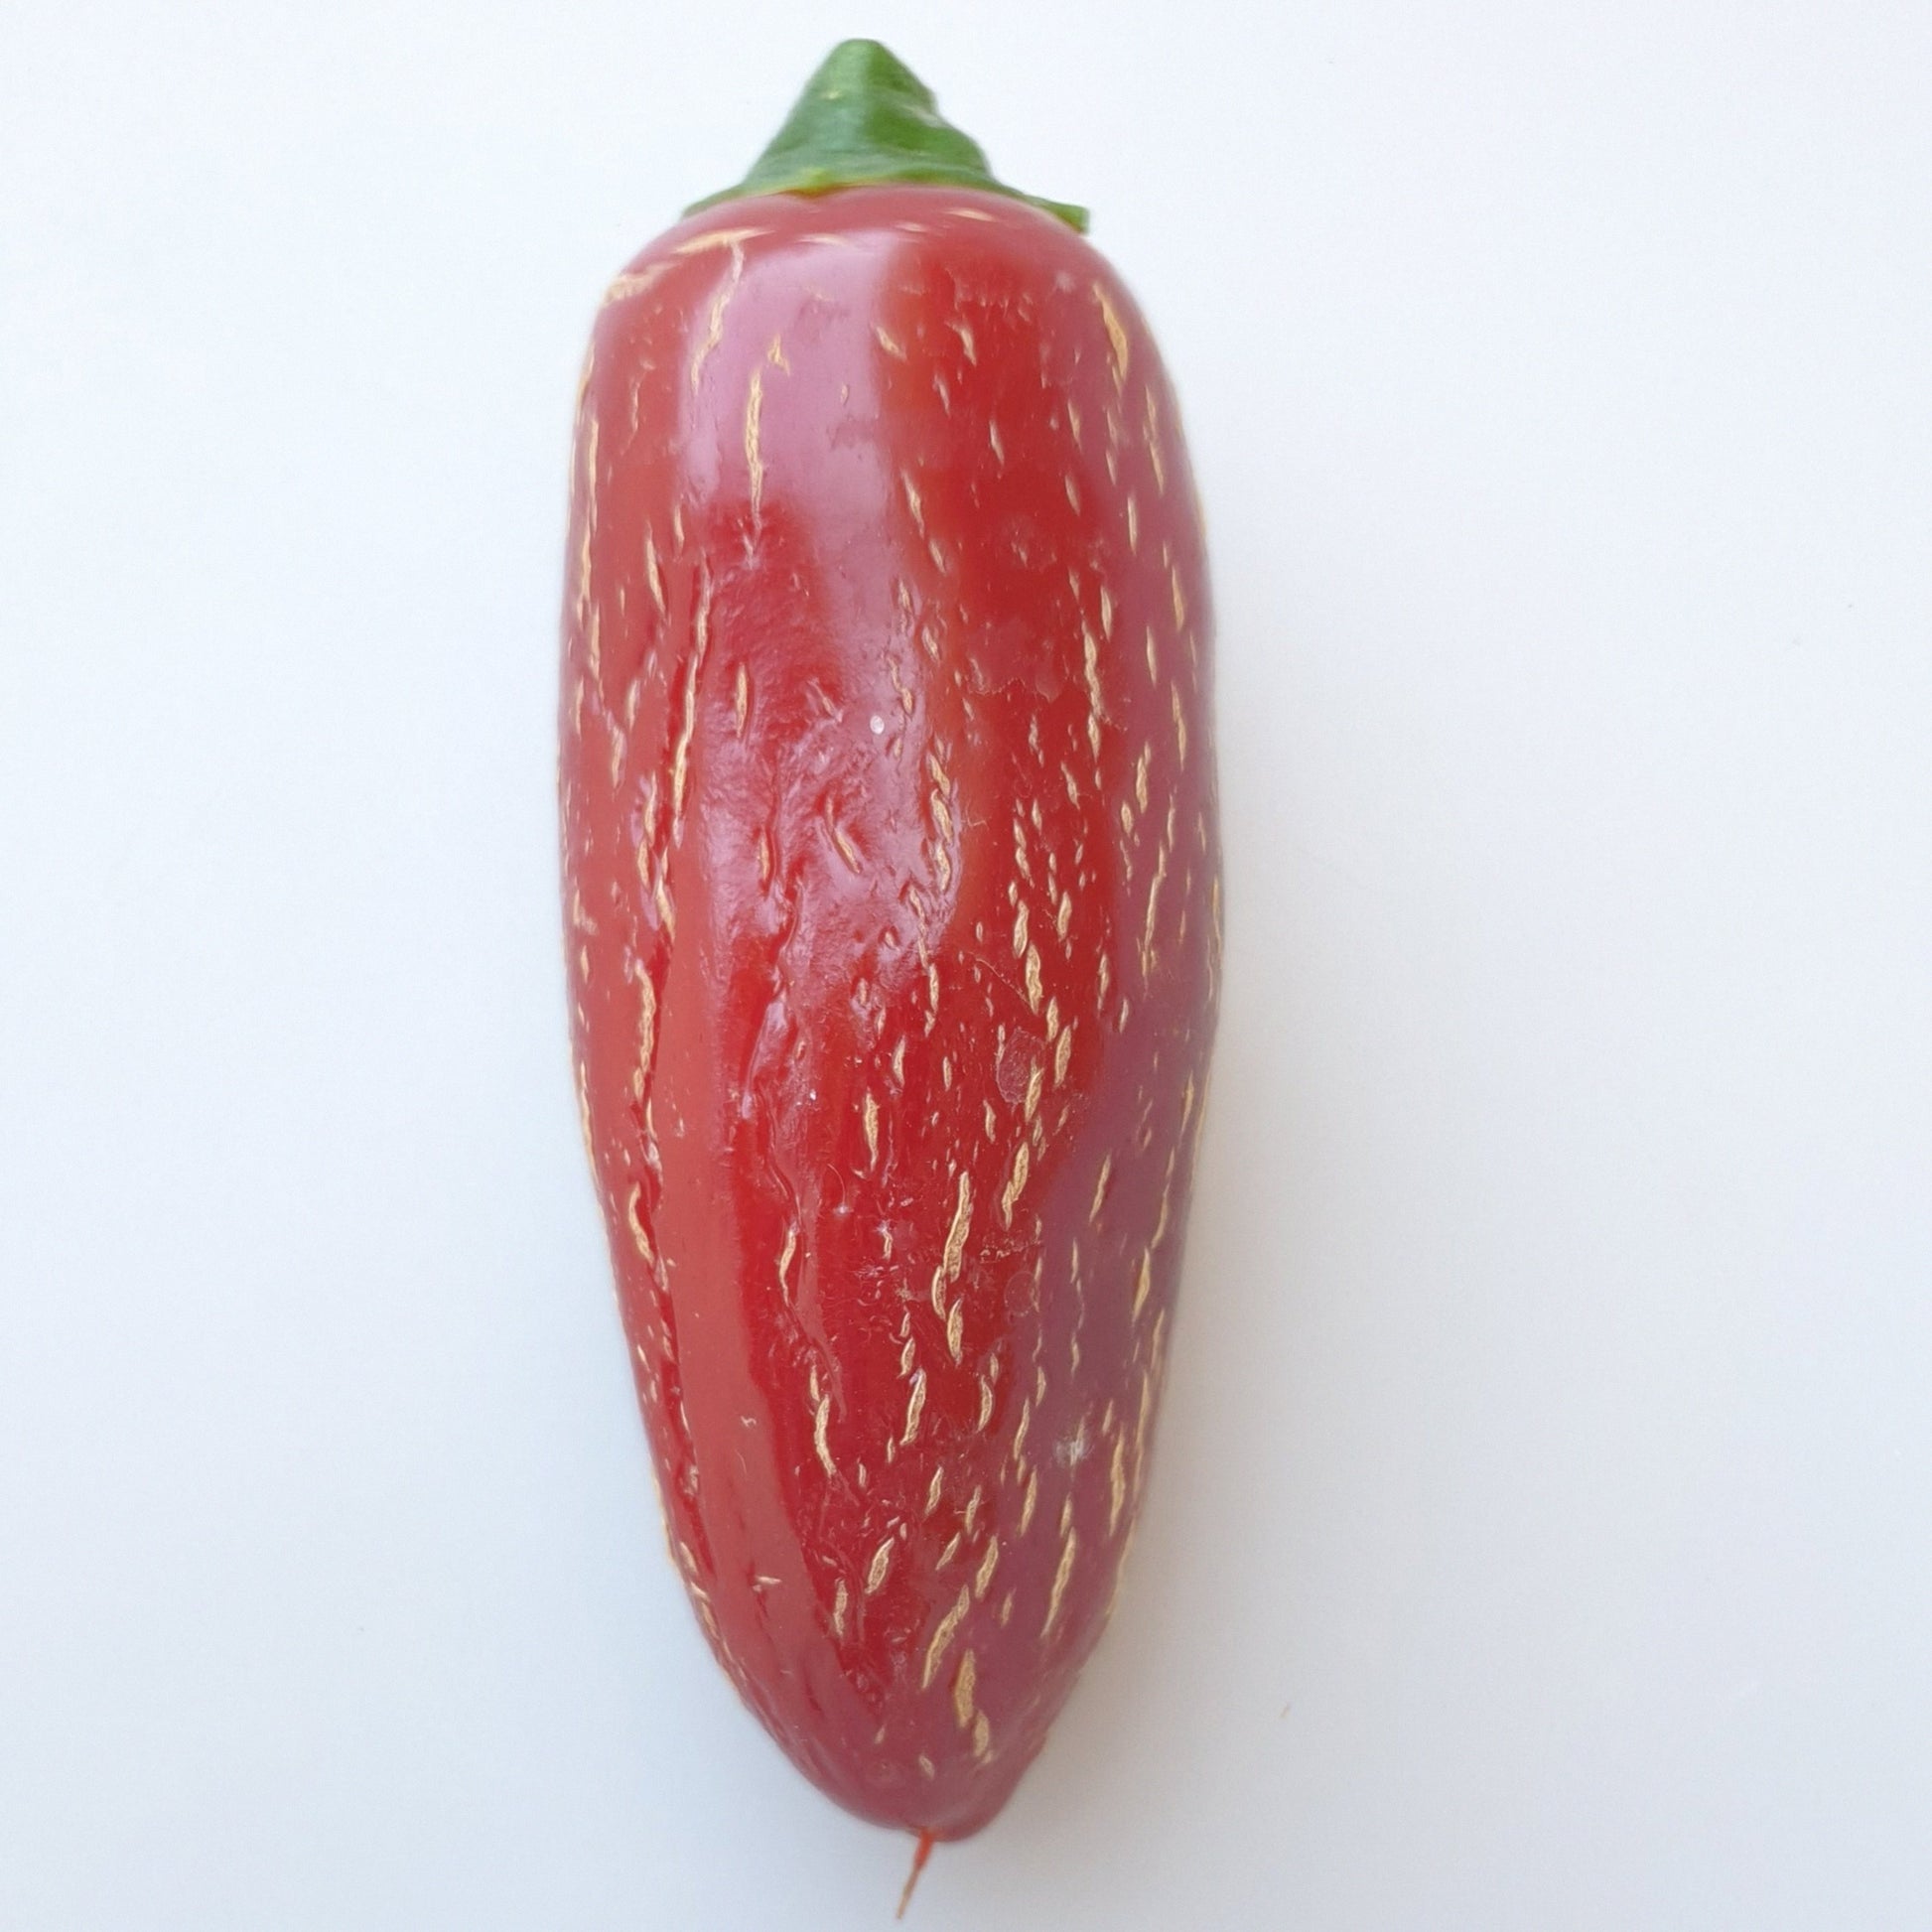 einzelne rote rissige Frucht der Jalapeno False Alarma